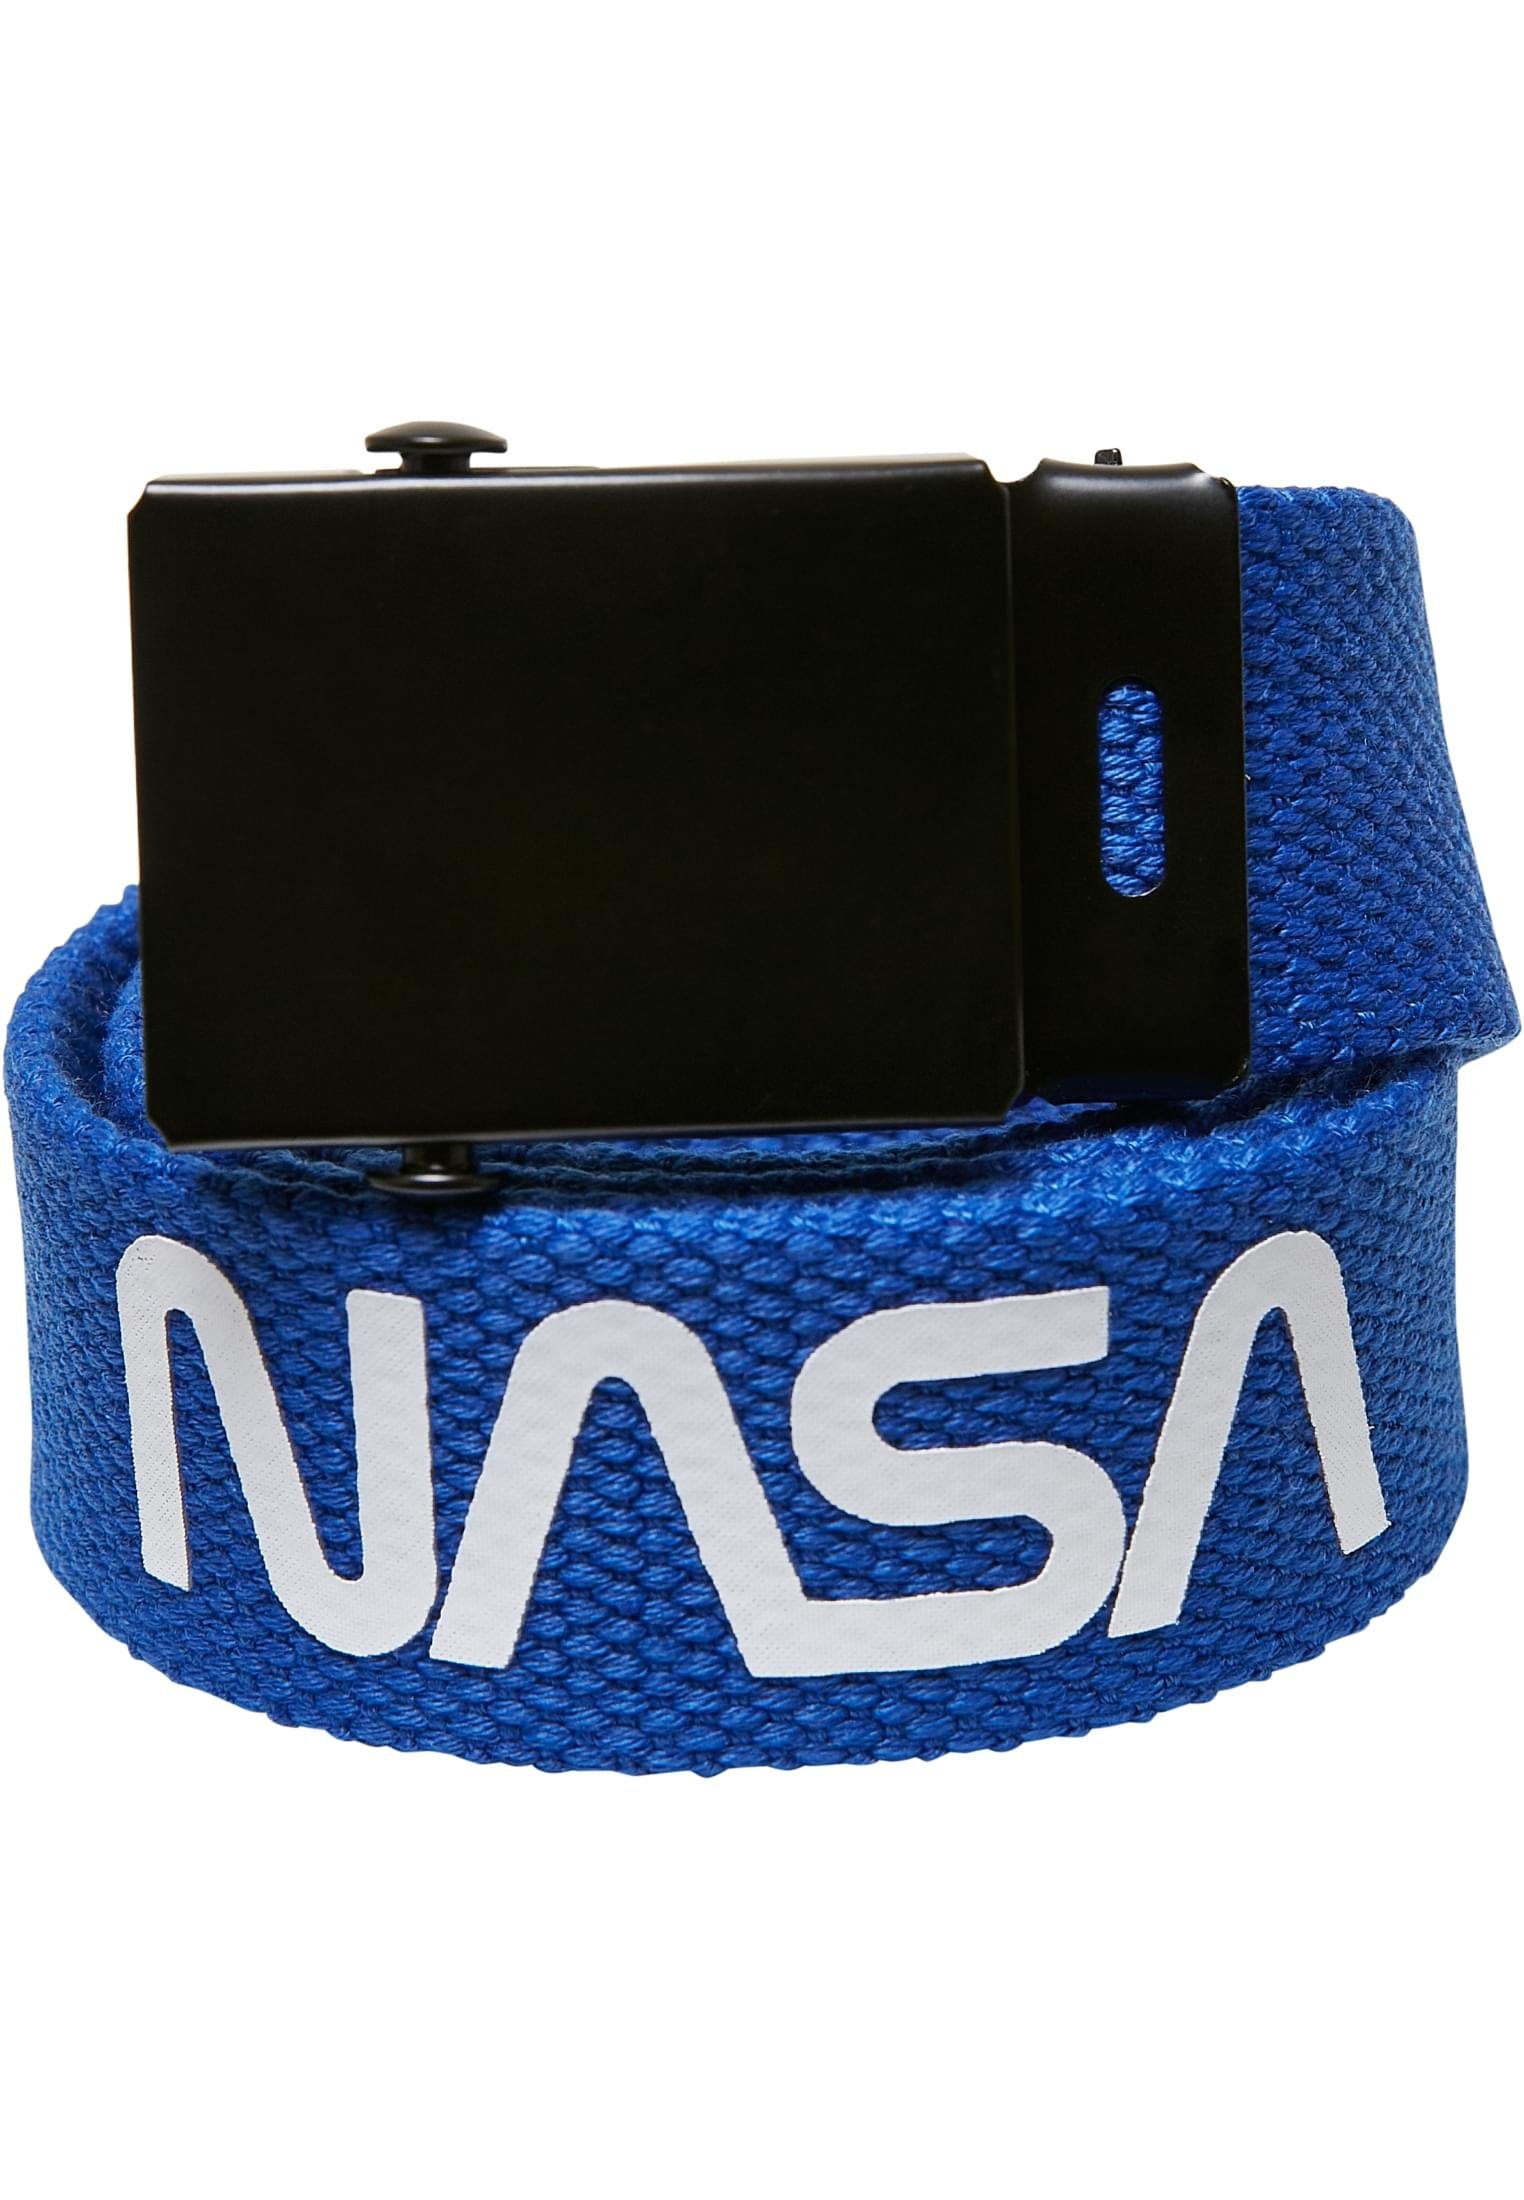 MisterTee Hüftgürtel Accessoires NASA 2-Pack Kids Belt white/blue